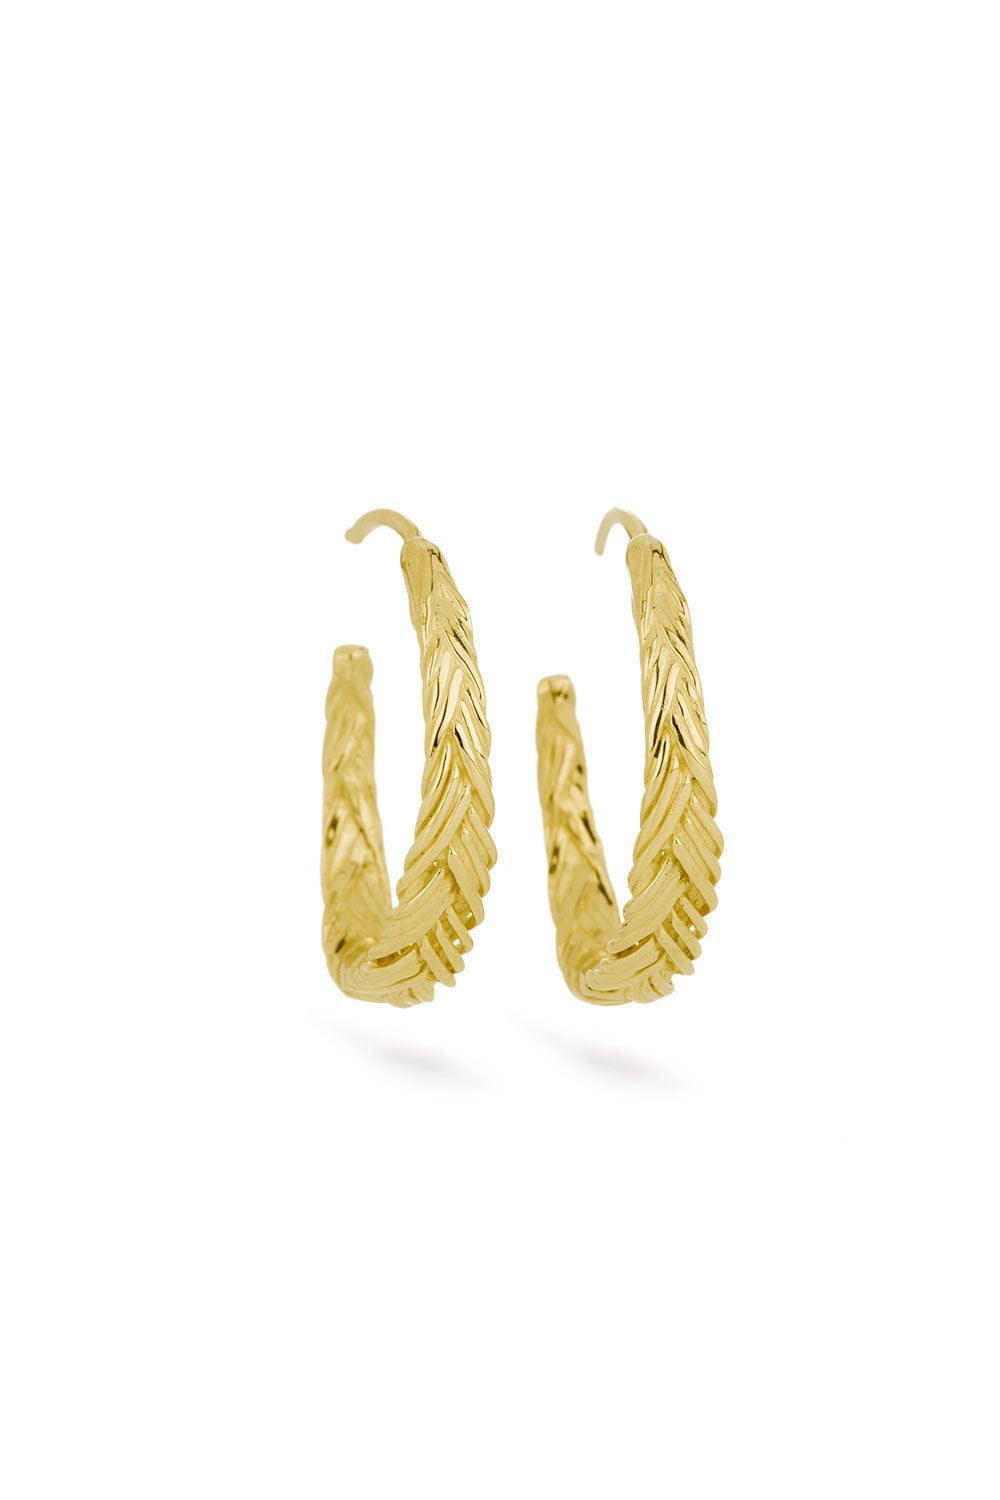 Braid Earrings - Gold hoops small